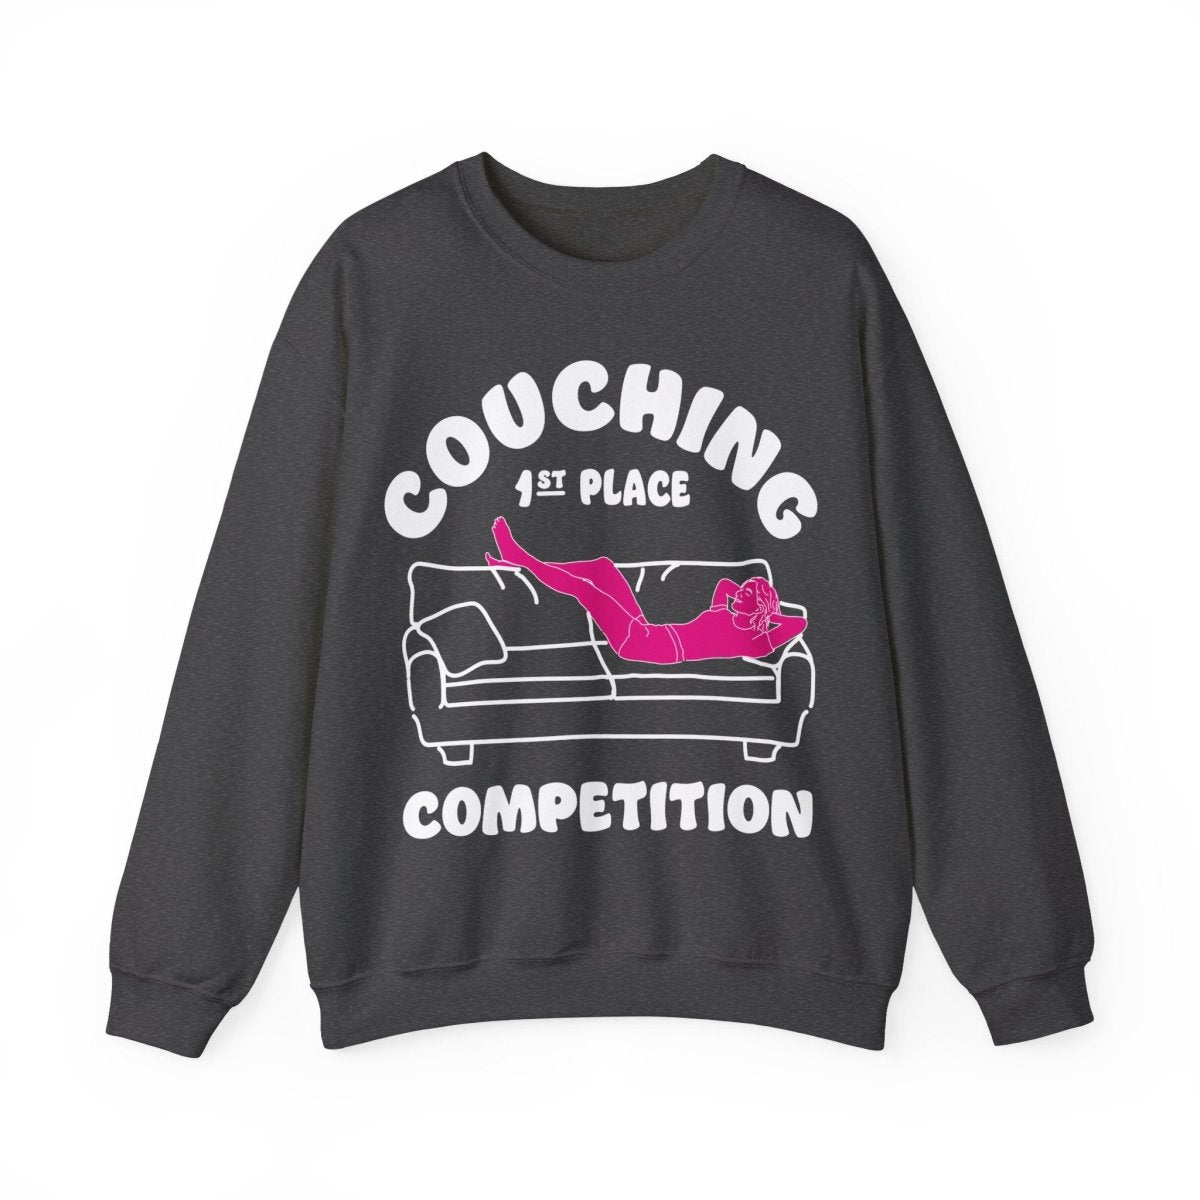 Couching Competitor Fleece Sweatshirt, Relaxing Inspiration, Funny, Couch Potato, Weekend